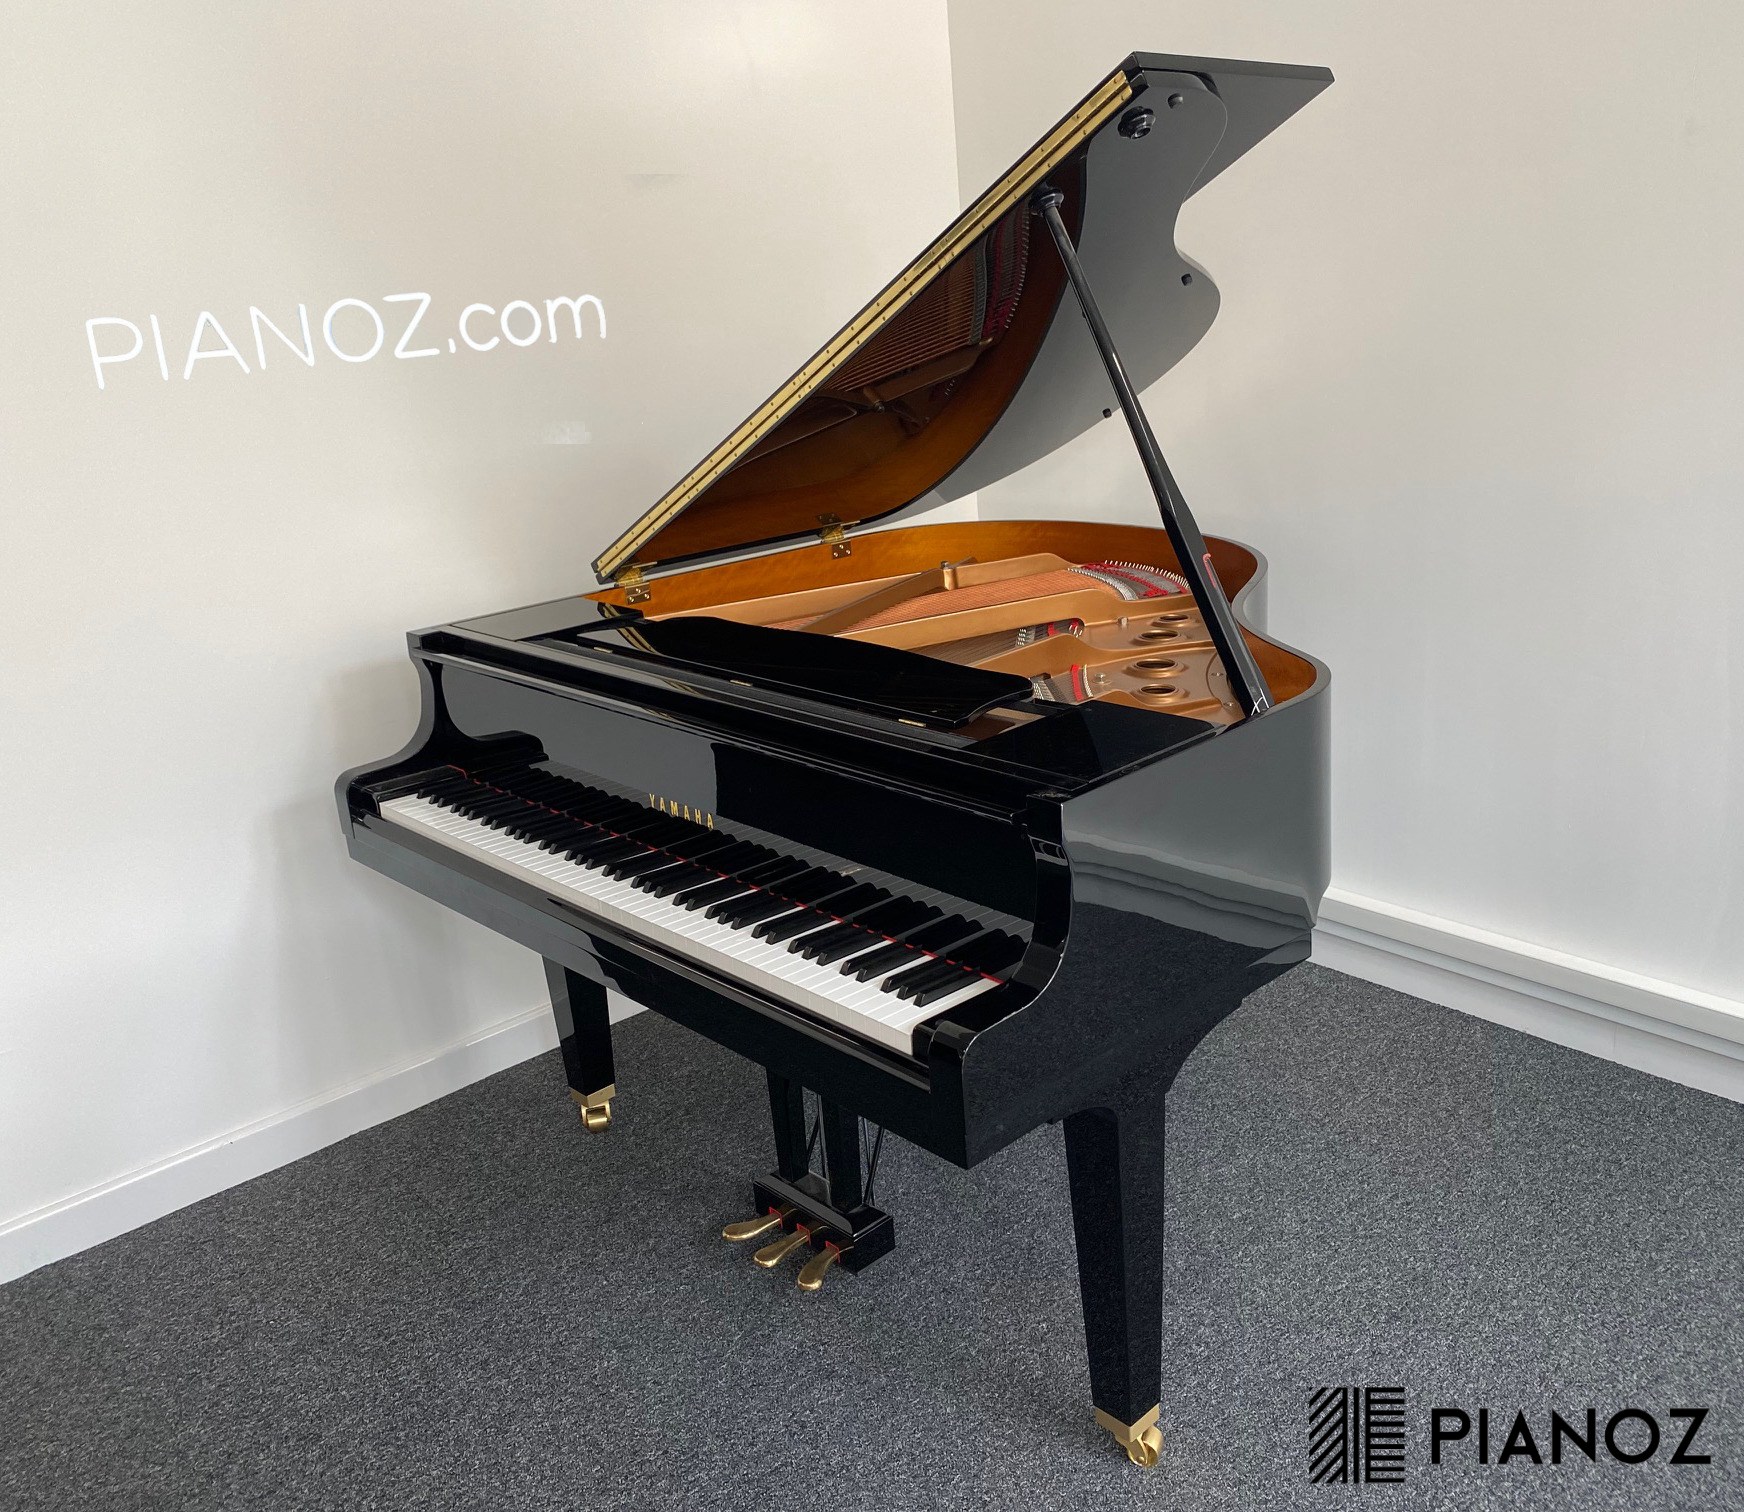 Yamaha GB1K Baby Grand Piano piano for sale in UK